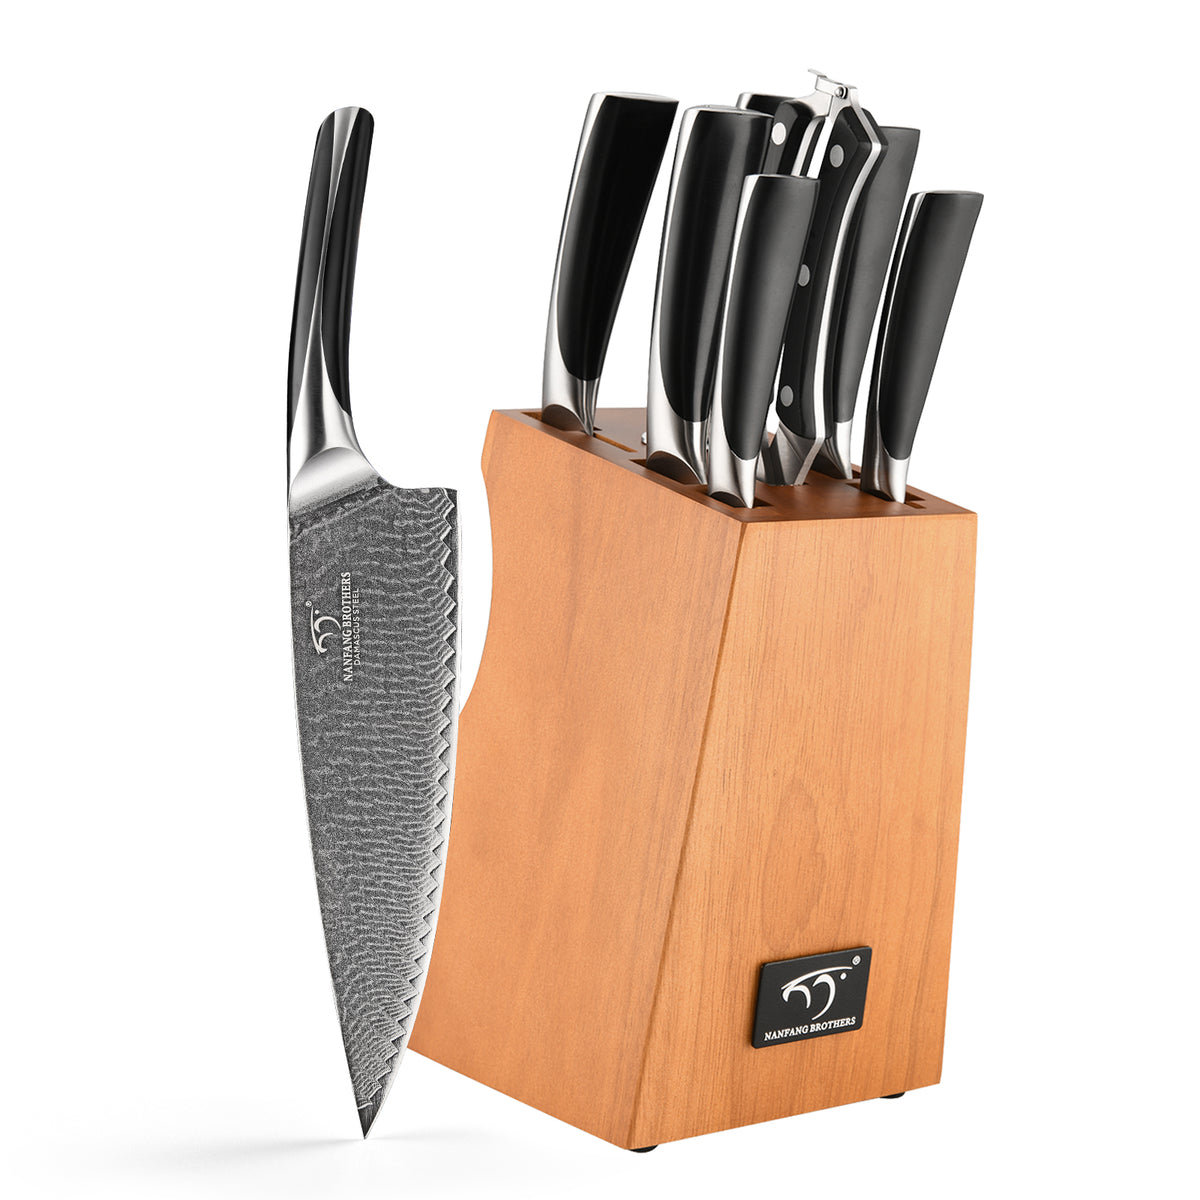 NANFANG BROTHERS Knife Set, 9 Pieces Damascus Kitchen Knife Set